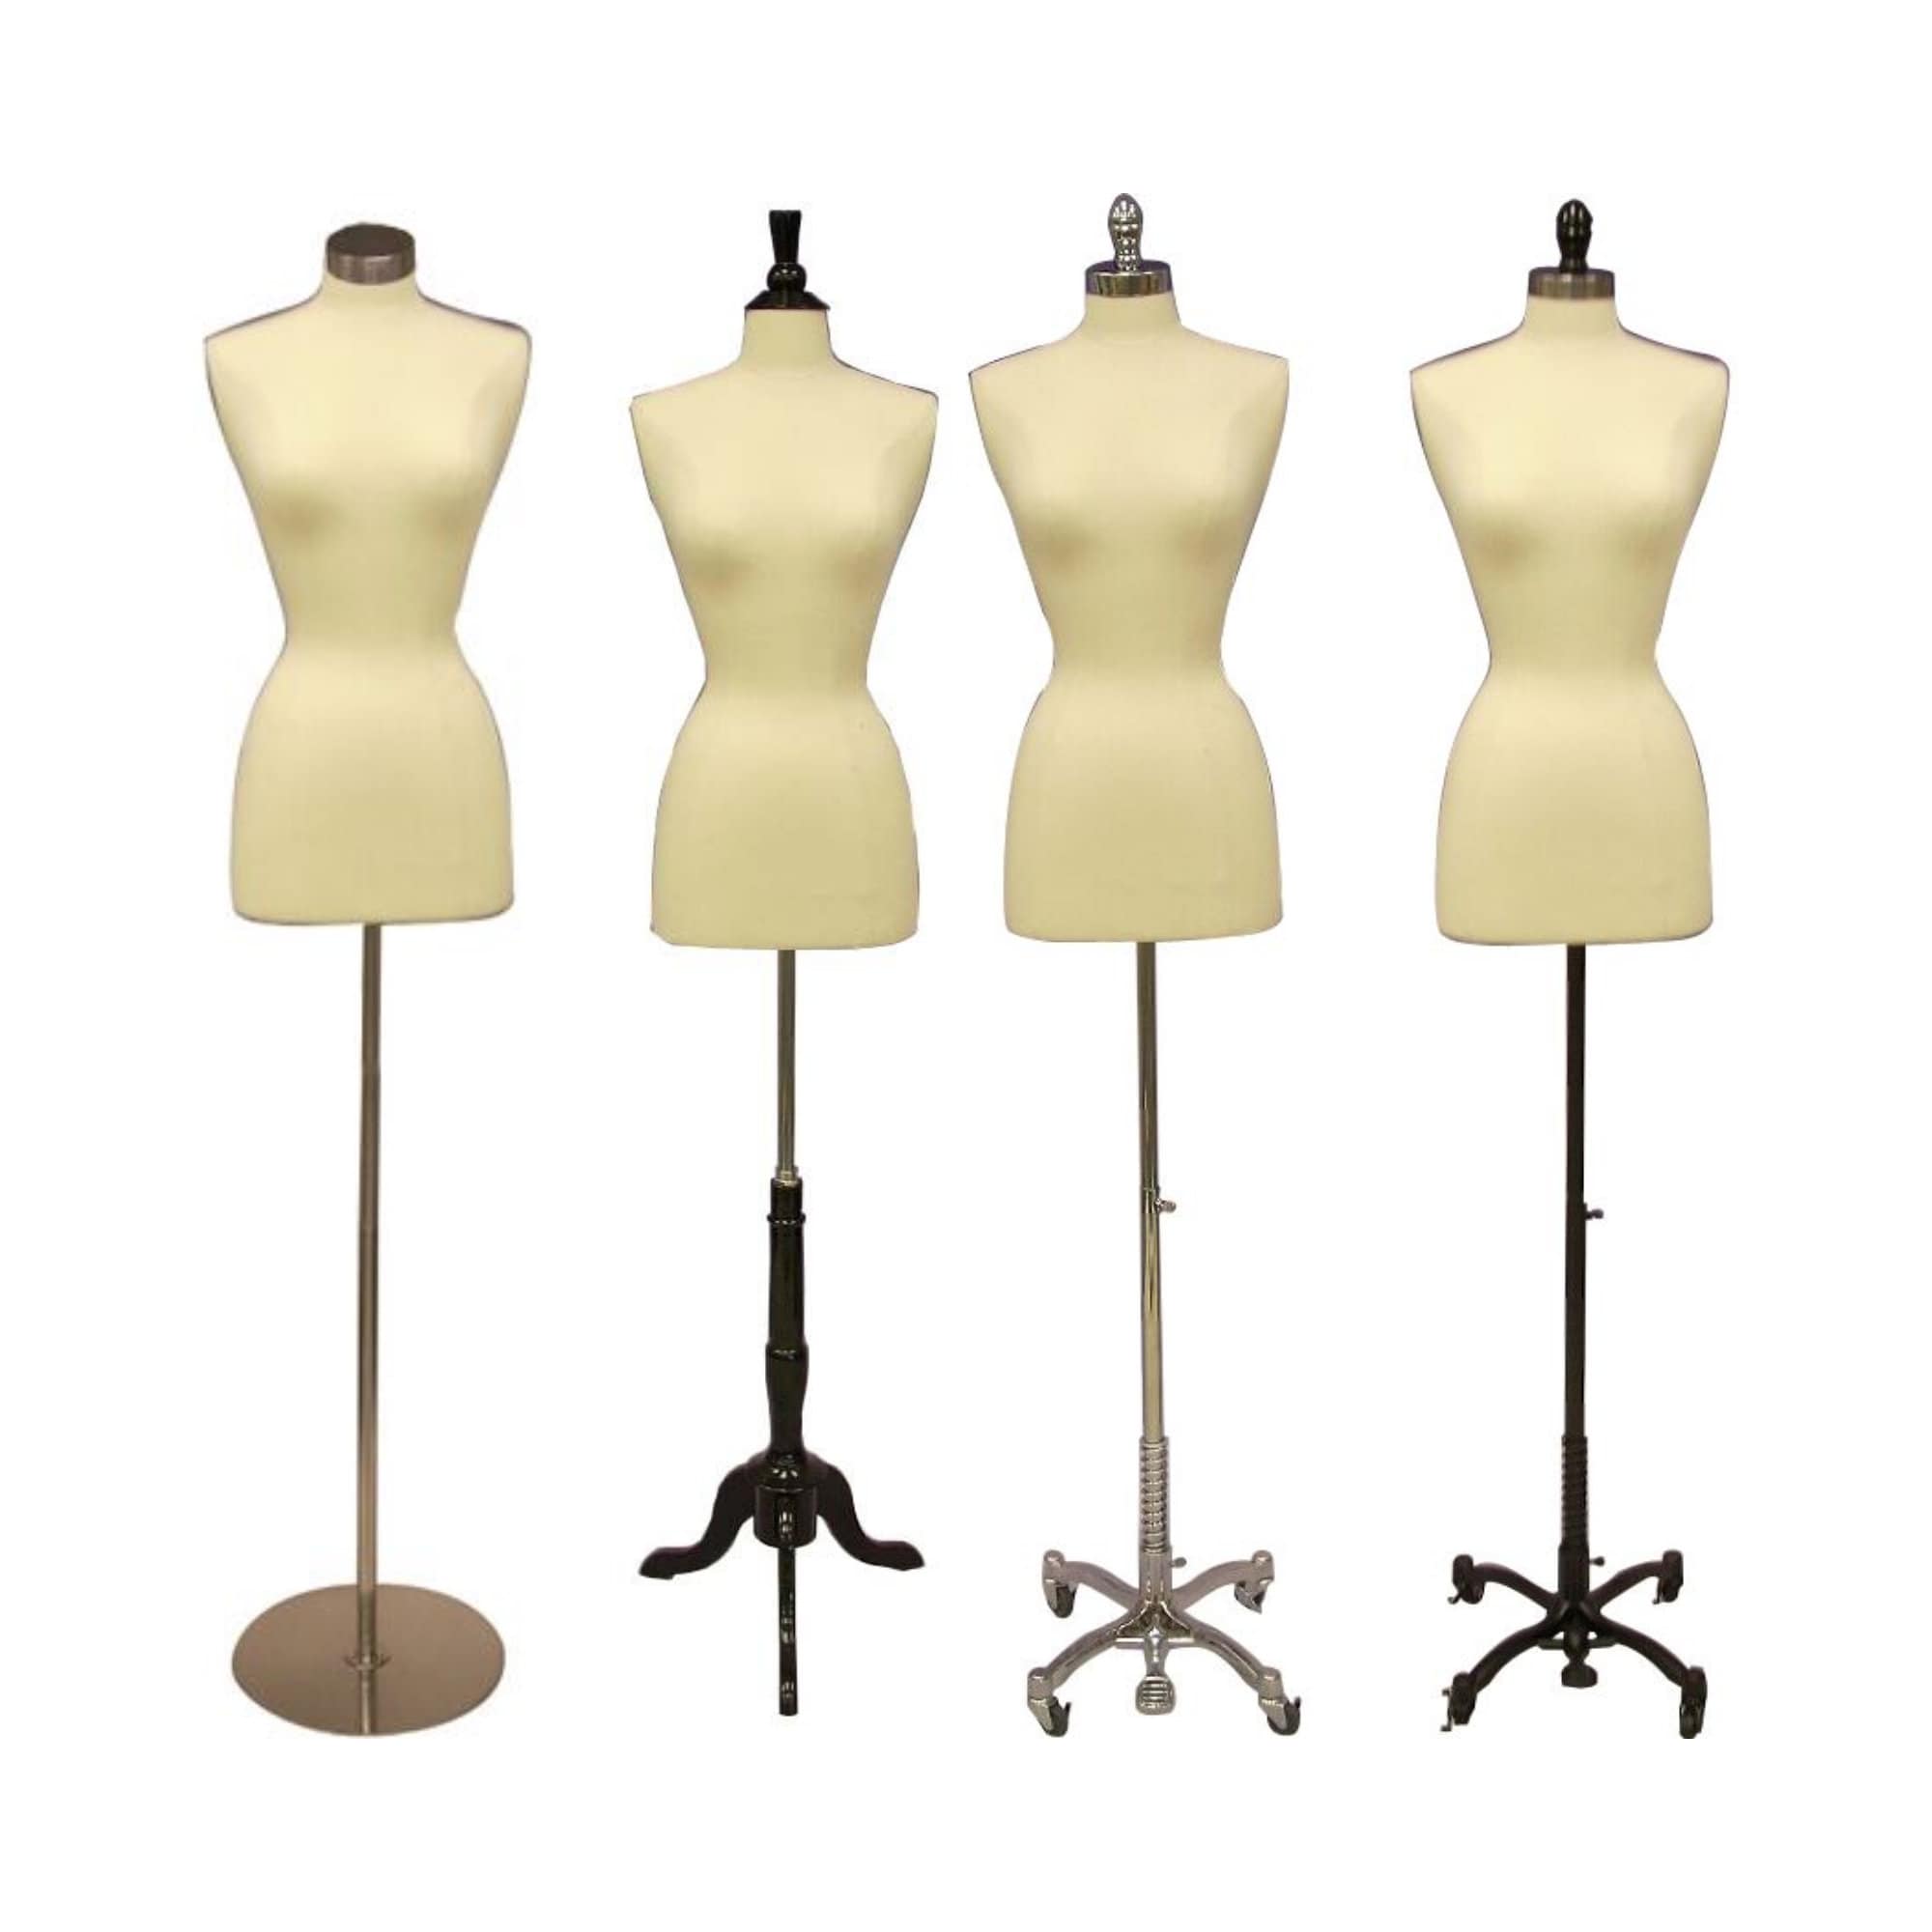 Hangers Female Torso Body Mannequins Black & Flesh Women Dress Forms Set 